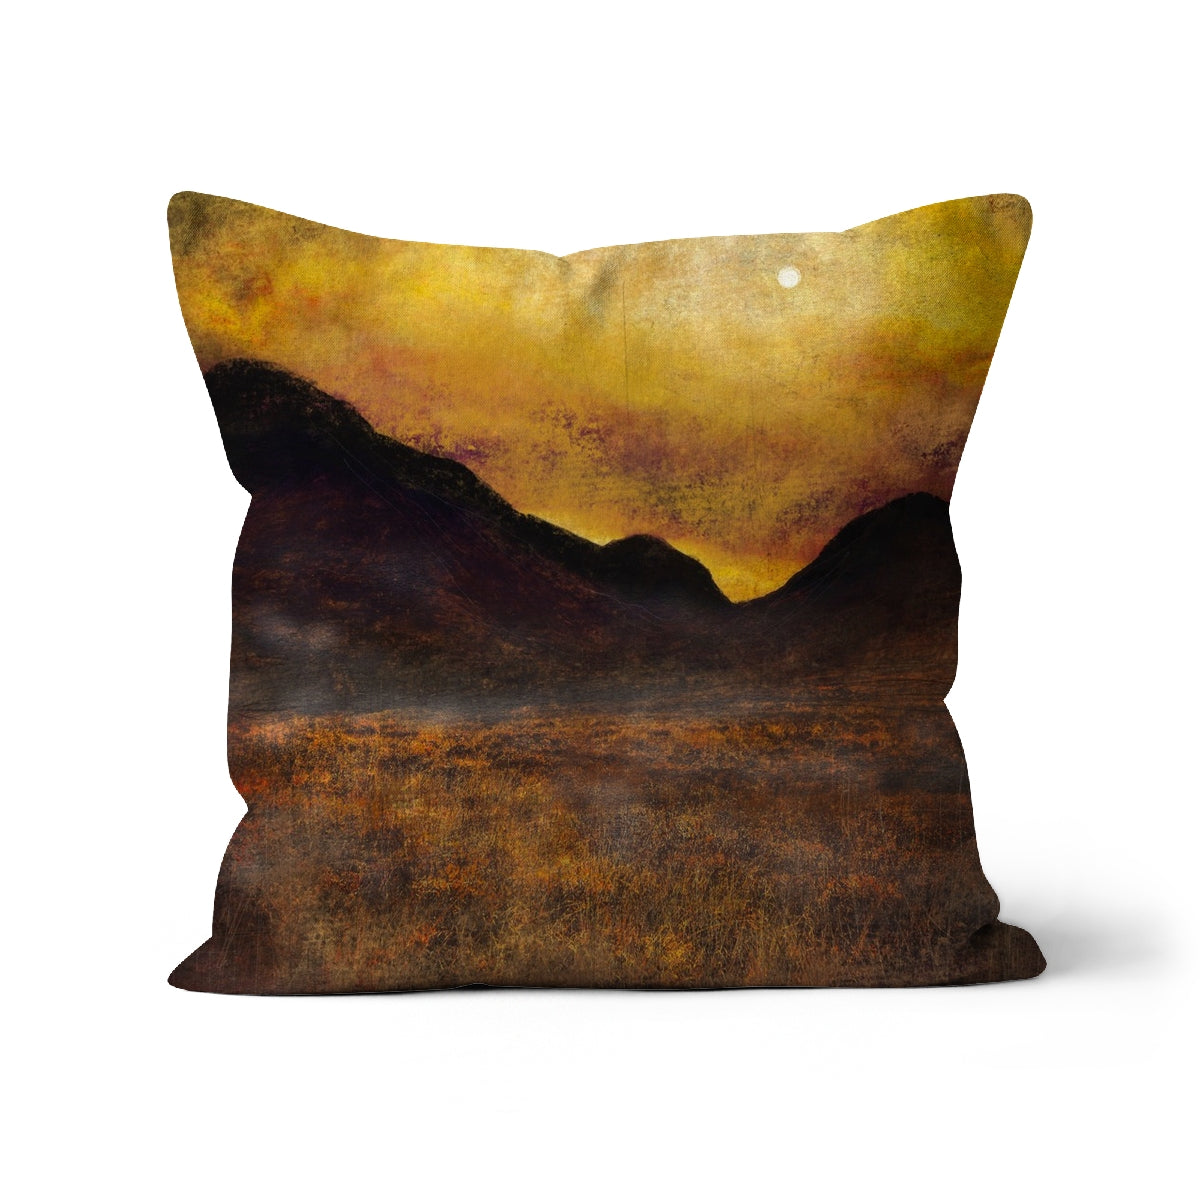 Glencoe Moonlight Art Gifts Cushion-Cushions-Glencoe Art Gallery-Linen-16"x16"-Paintings, Prints, Homeware, Art Gifts From Scotland By Scottish Artist Kevin Hunter